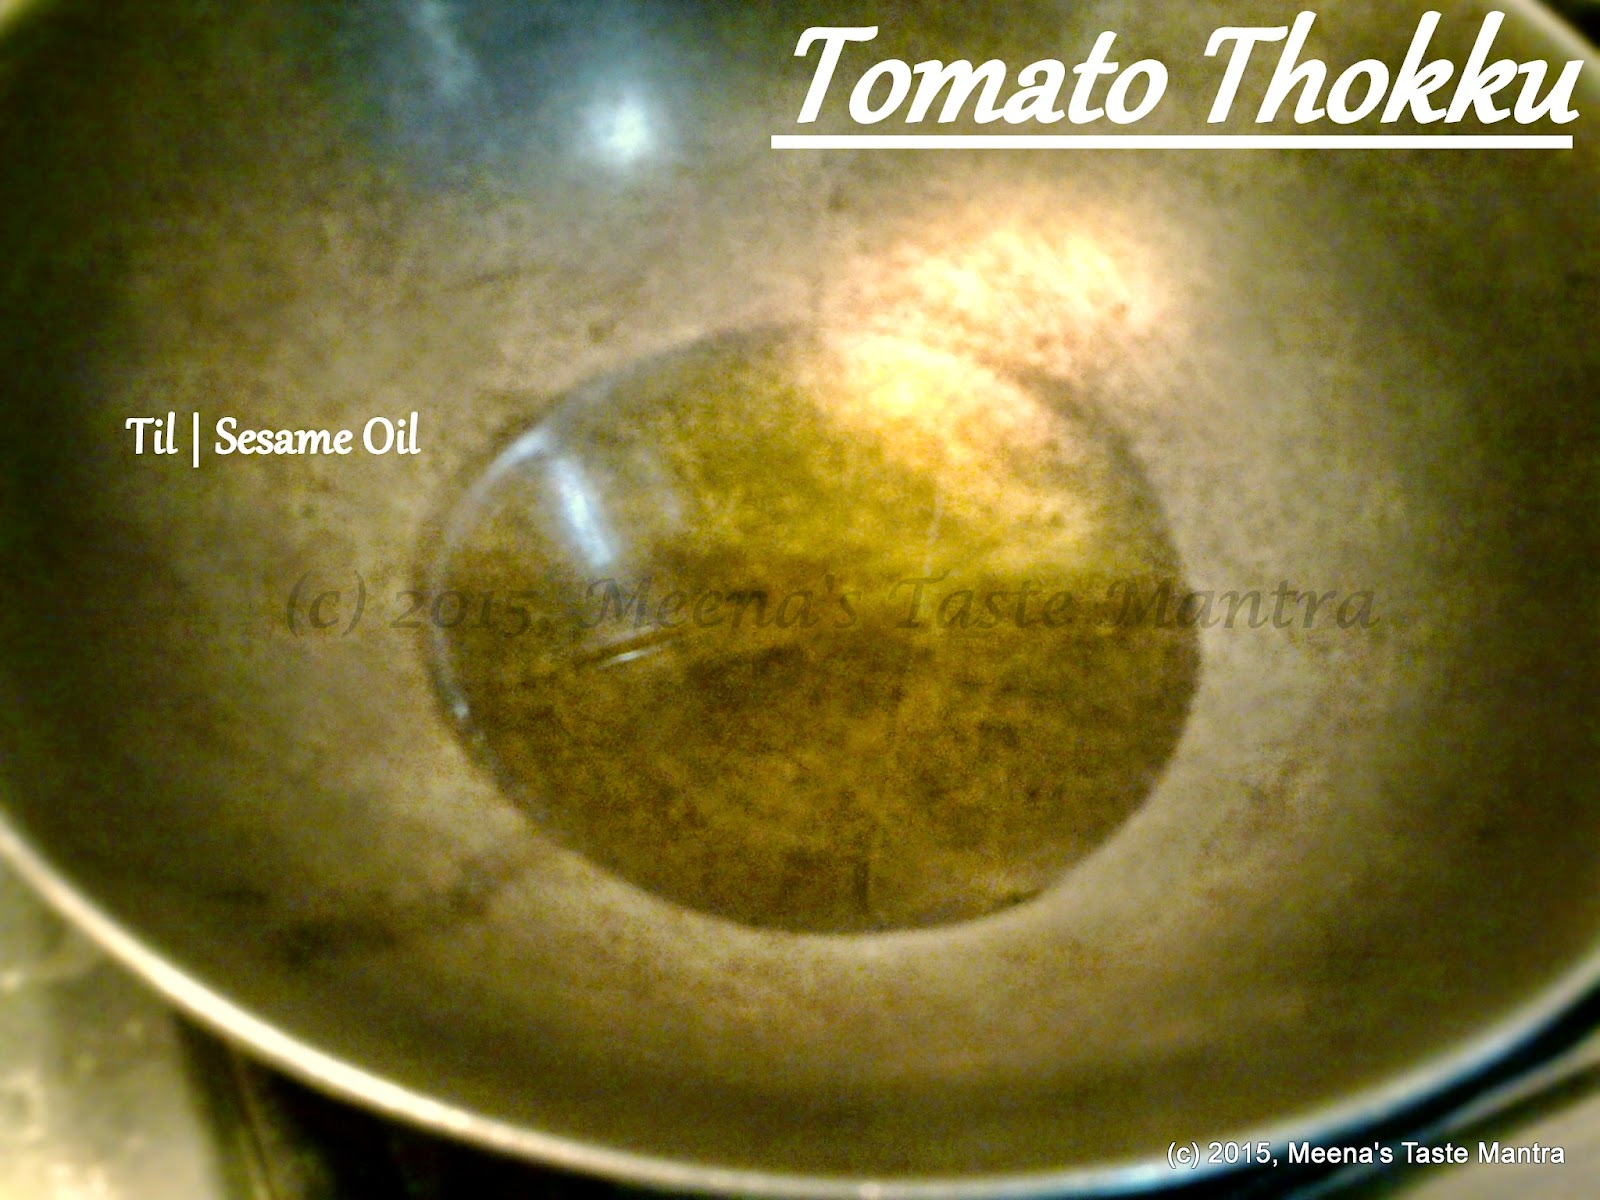 Tomato Thokku -  Til Oil being heated